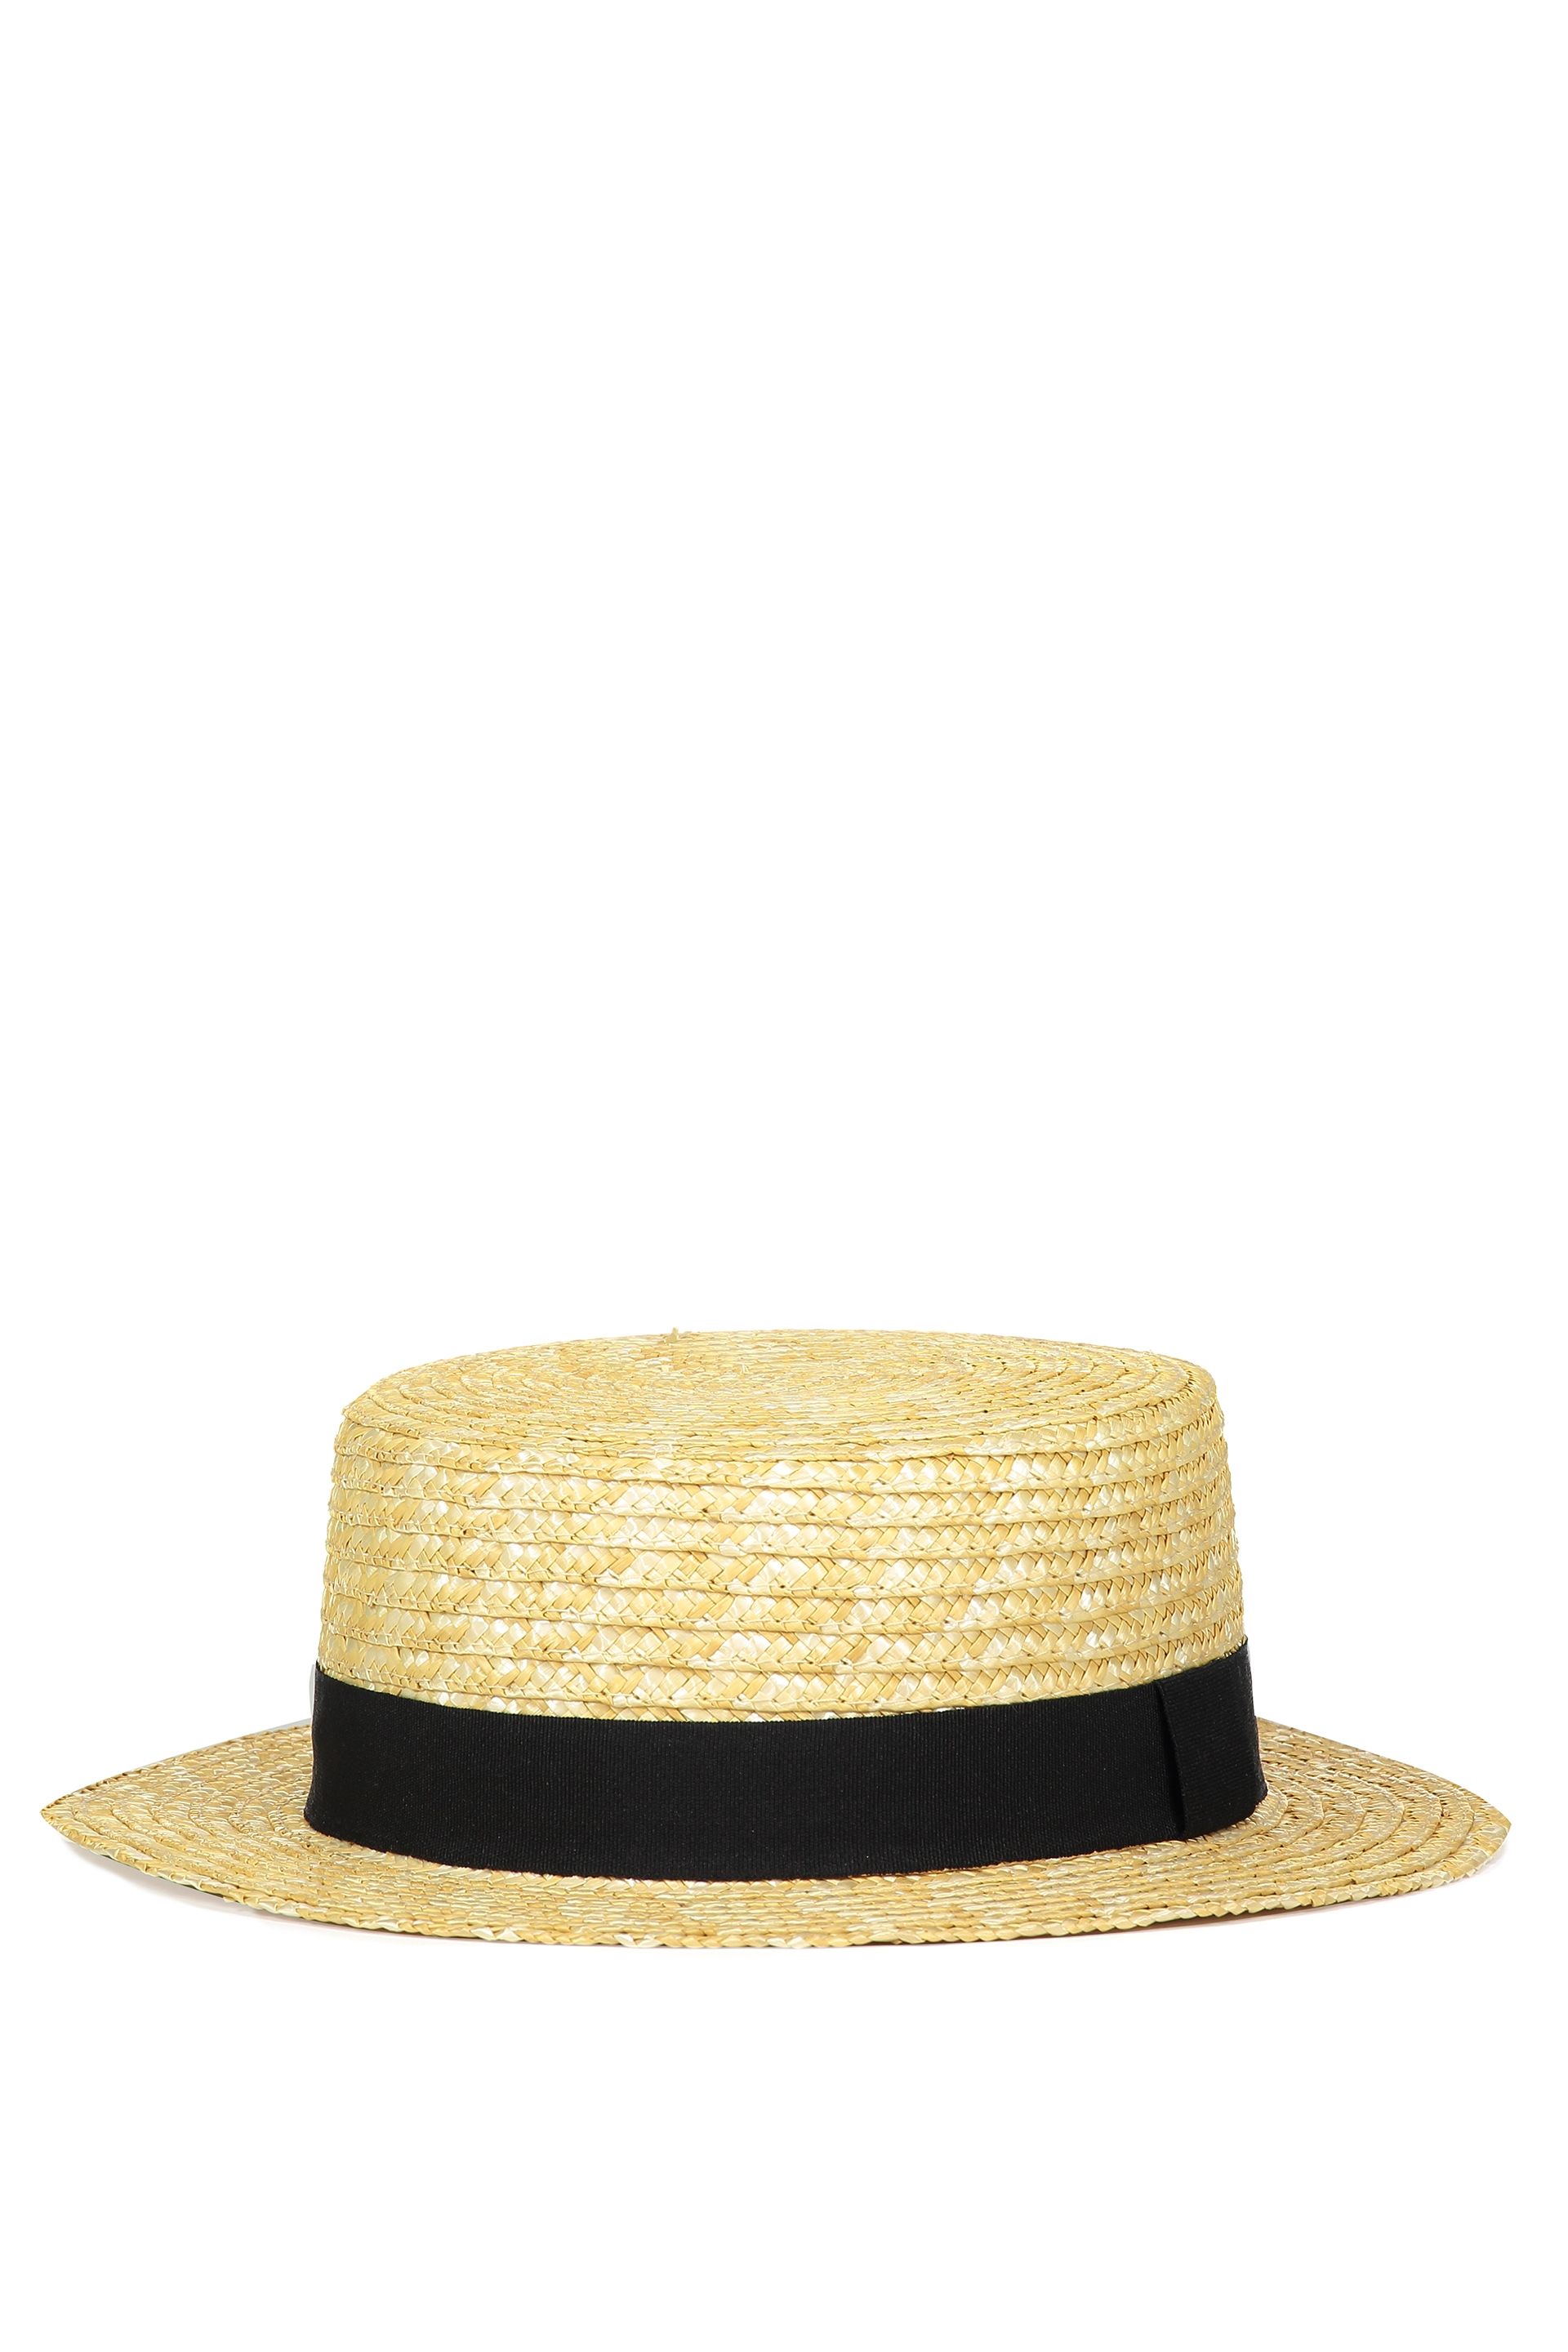 Rubi - Henley Boater Hat - Natural | Cotton On (US)